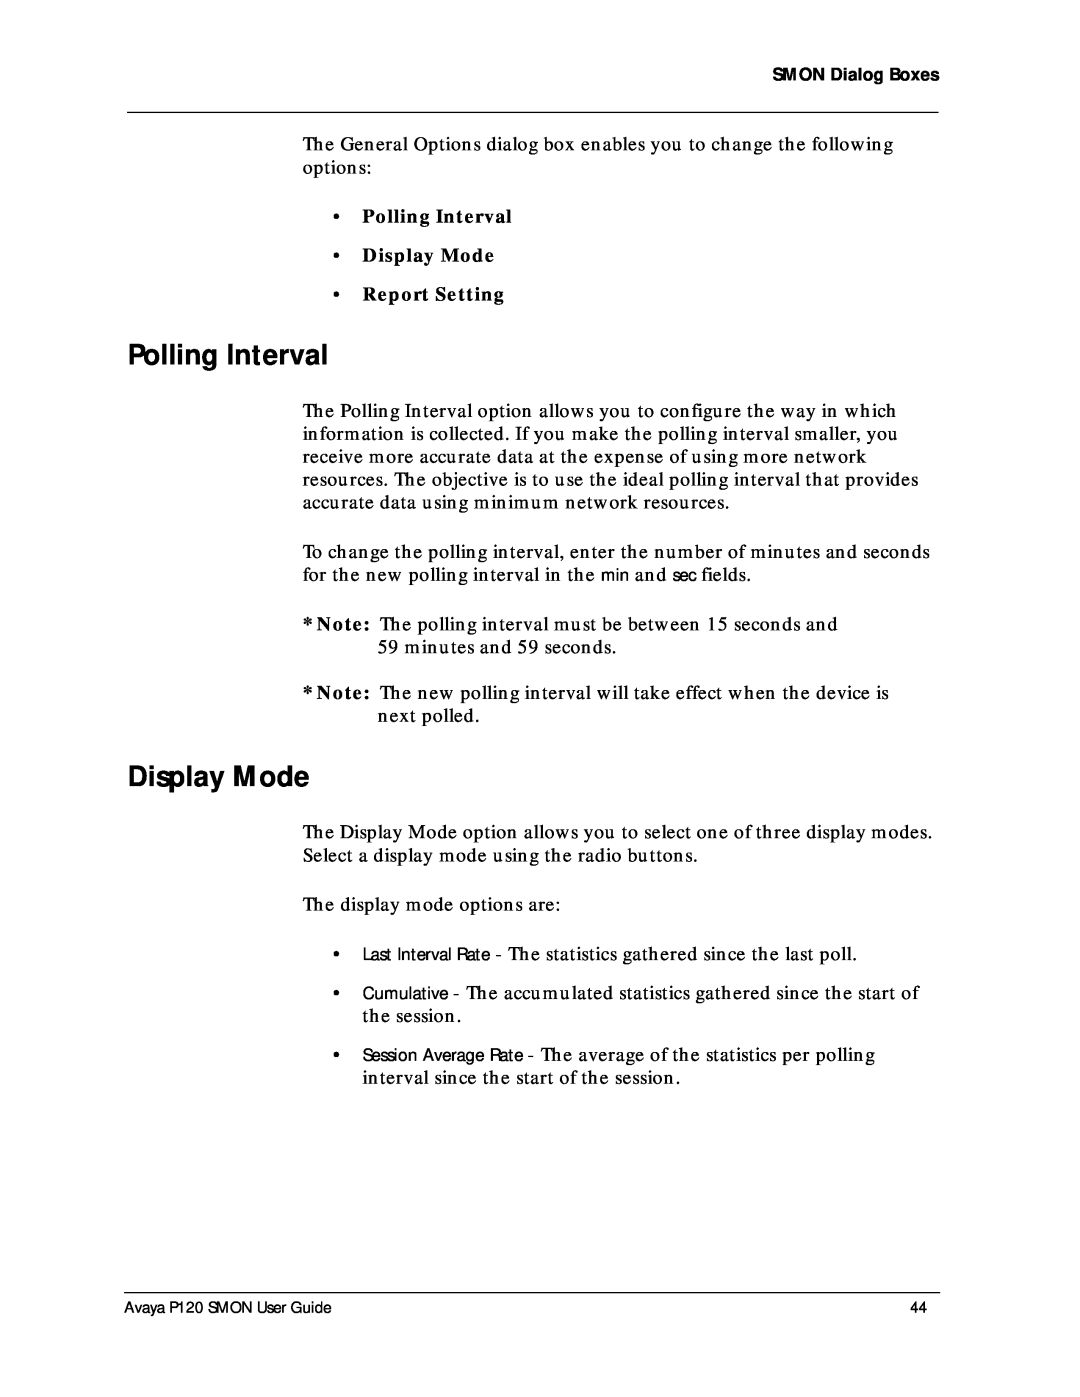 Avaya P120 SMON manual Polling Interval Display Mode Report Setting 